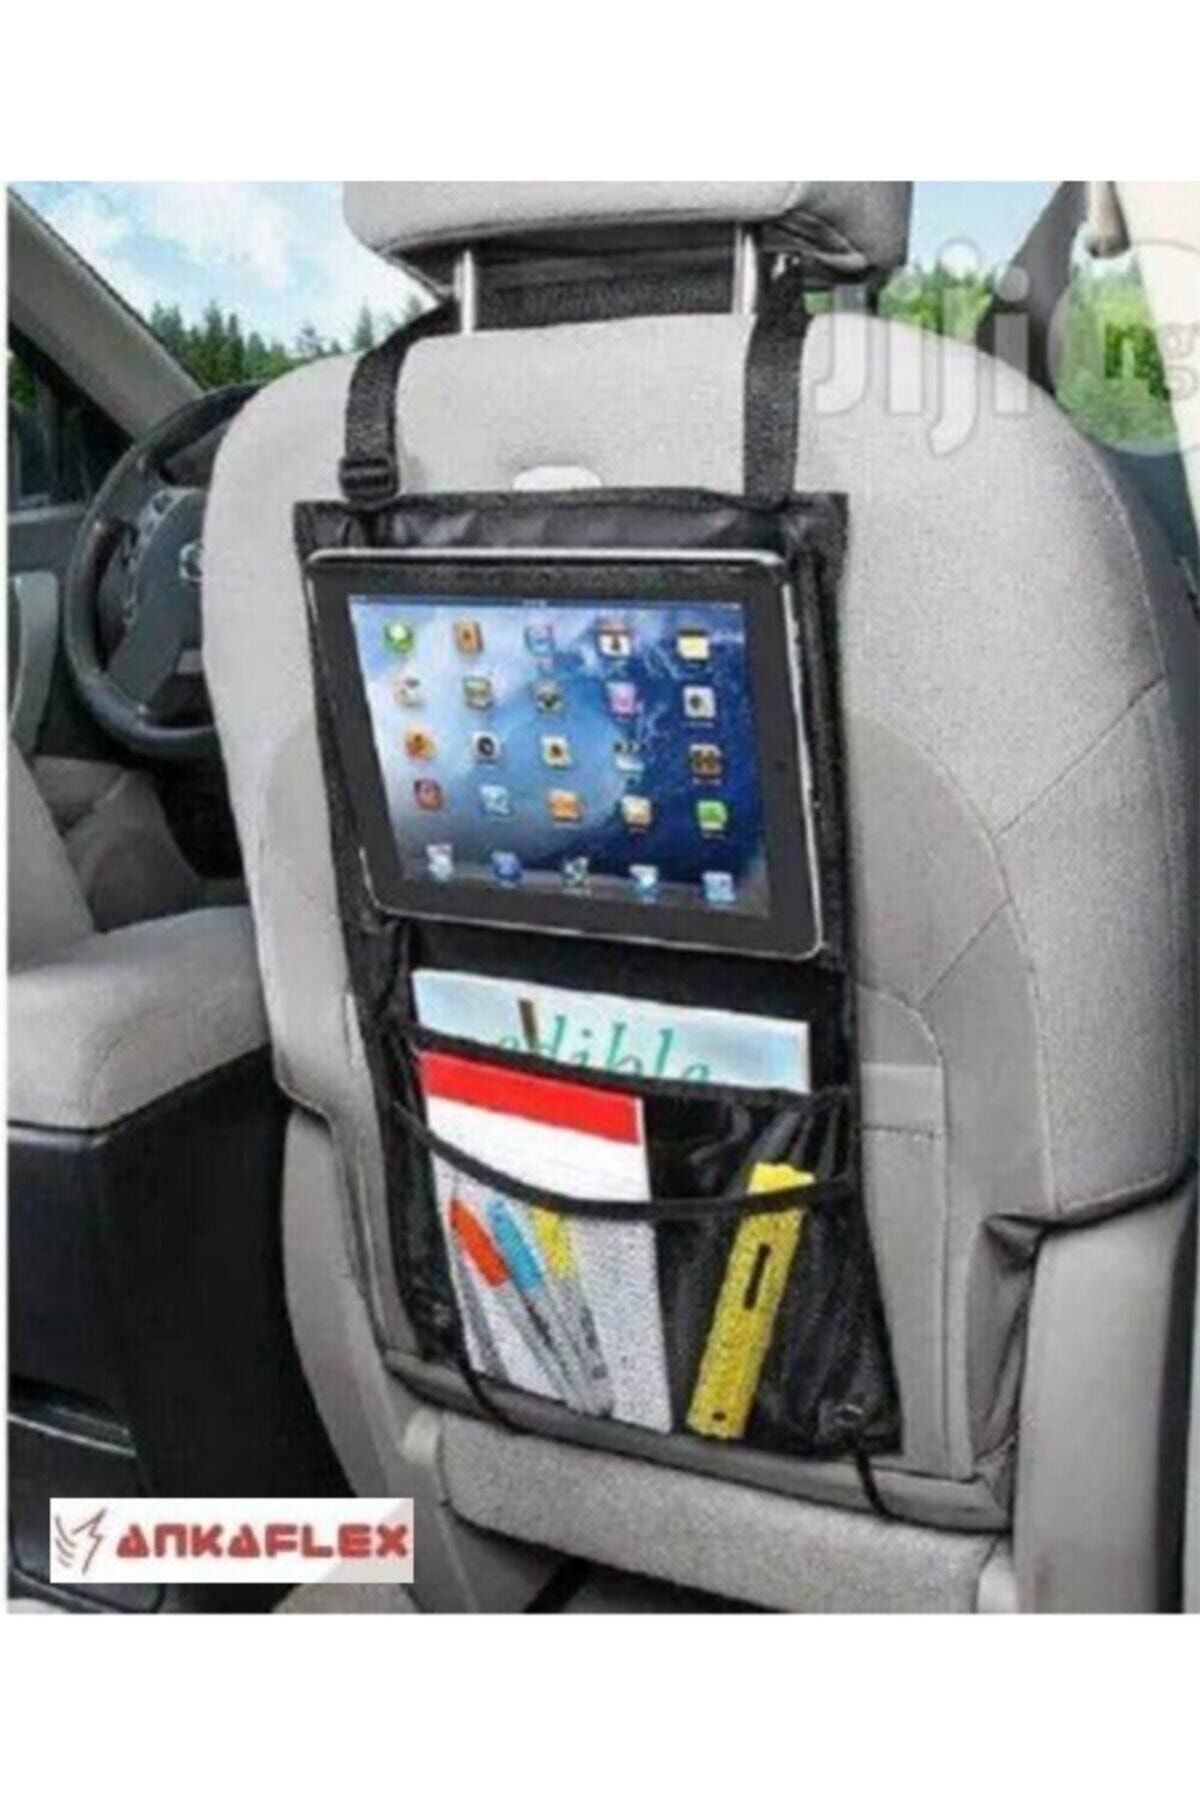 Ankaflex Car In-Vehicle Auto Seat Back Tablet Holder Practical Pocket  Organizer Bag Organizer